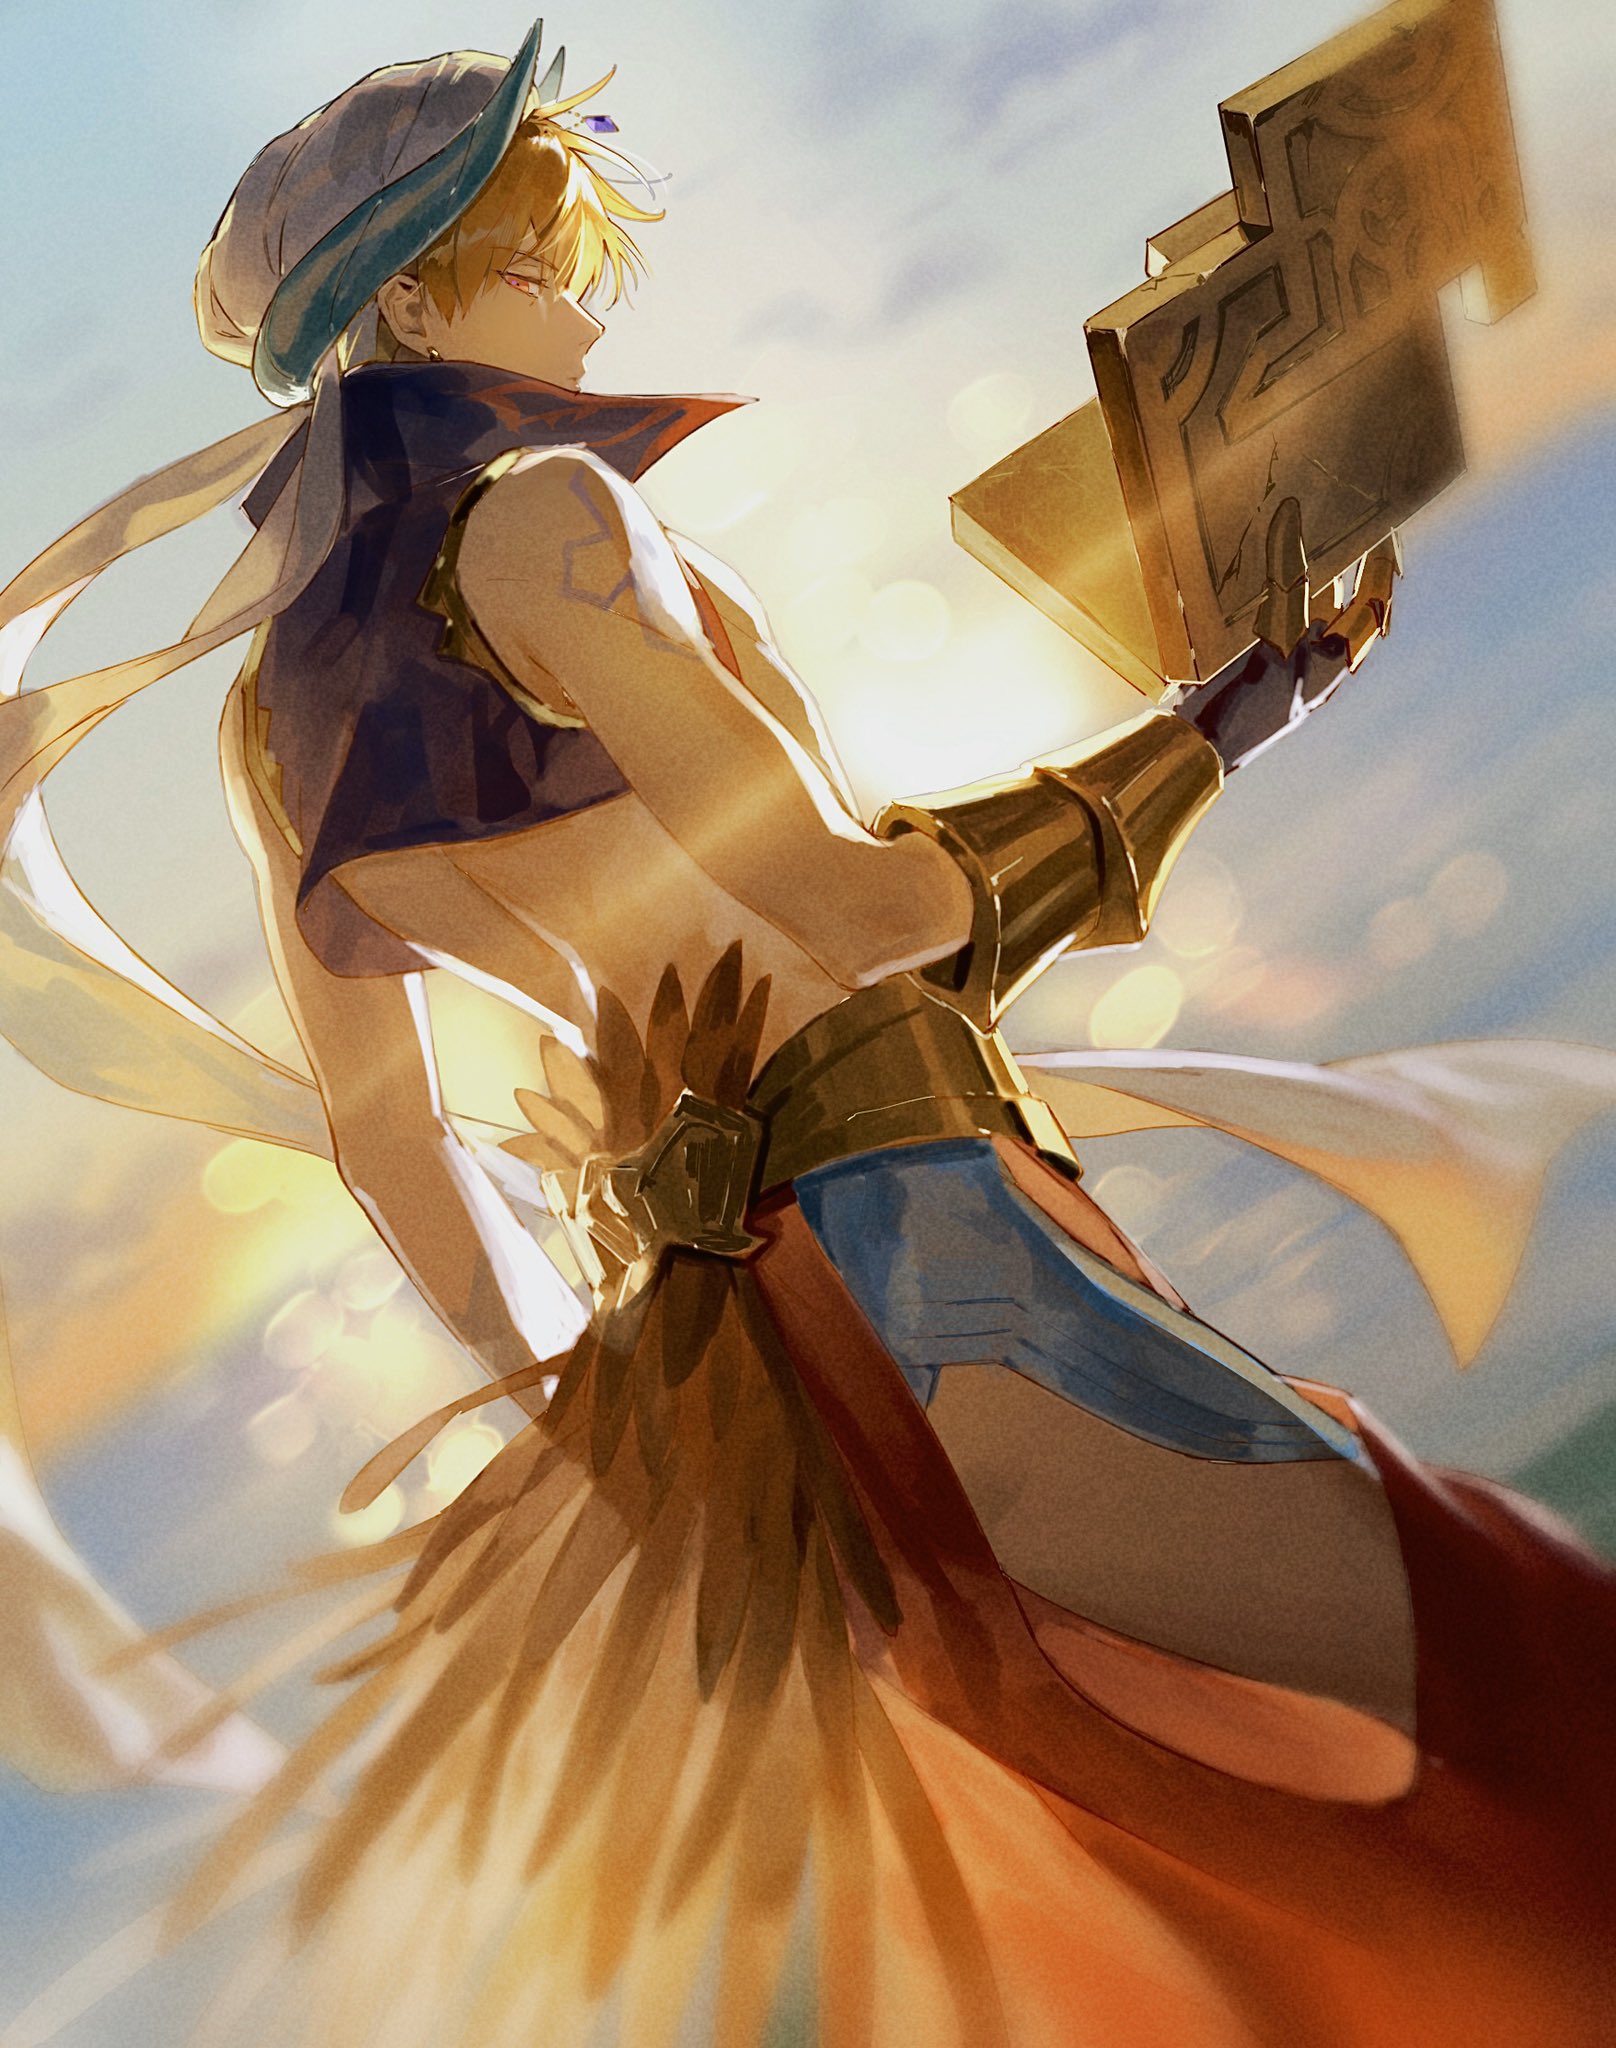 【Fate/pixiv】黄金の最古英雄王——吉尔伽美什 - 知乎